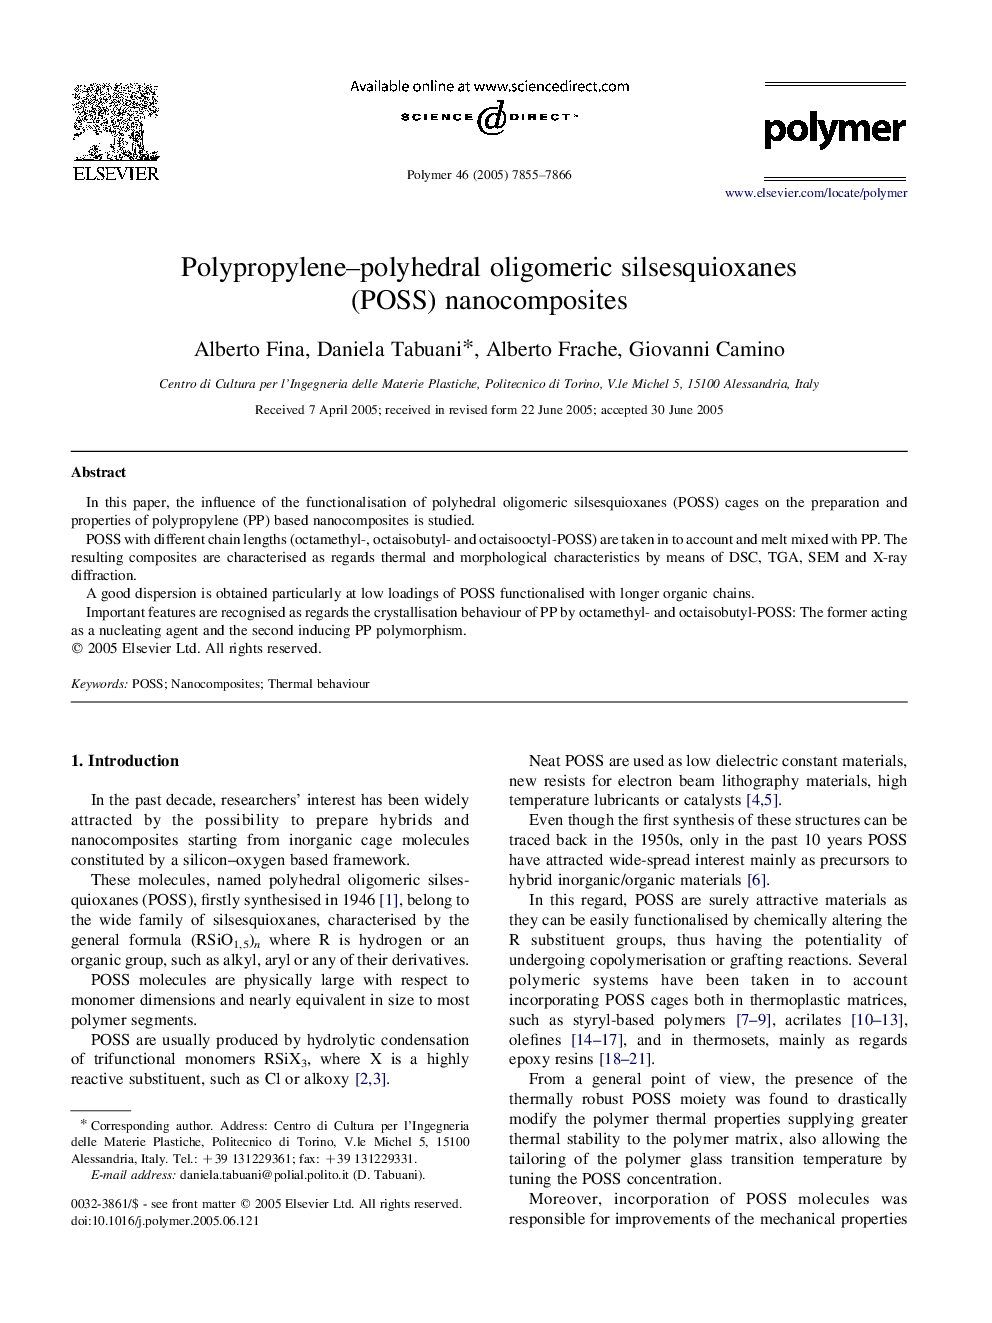 Polypropylene-polyhedral oligomeric silsesquioxanes (POSS) nanocomposites